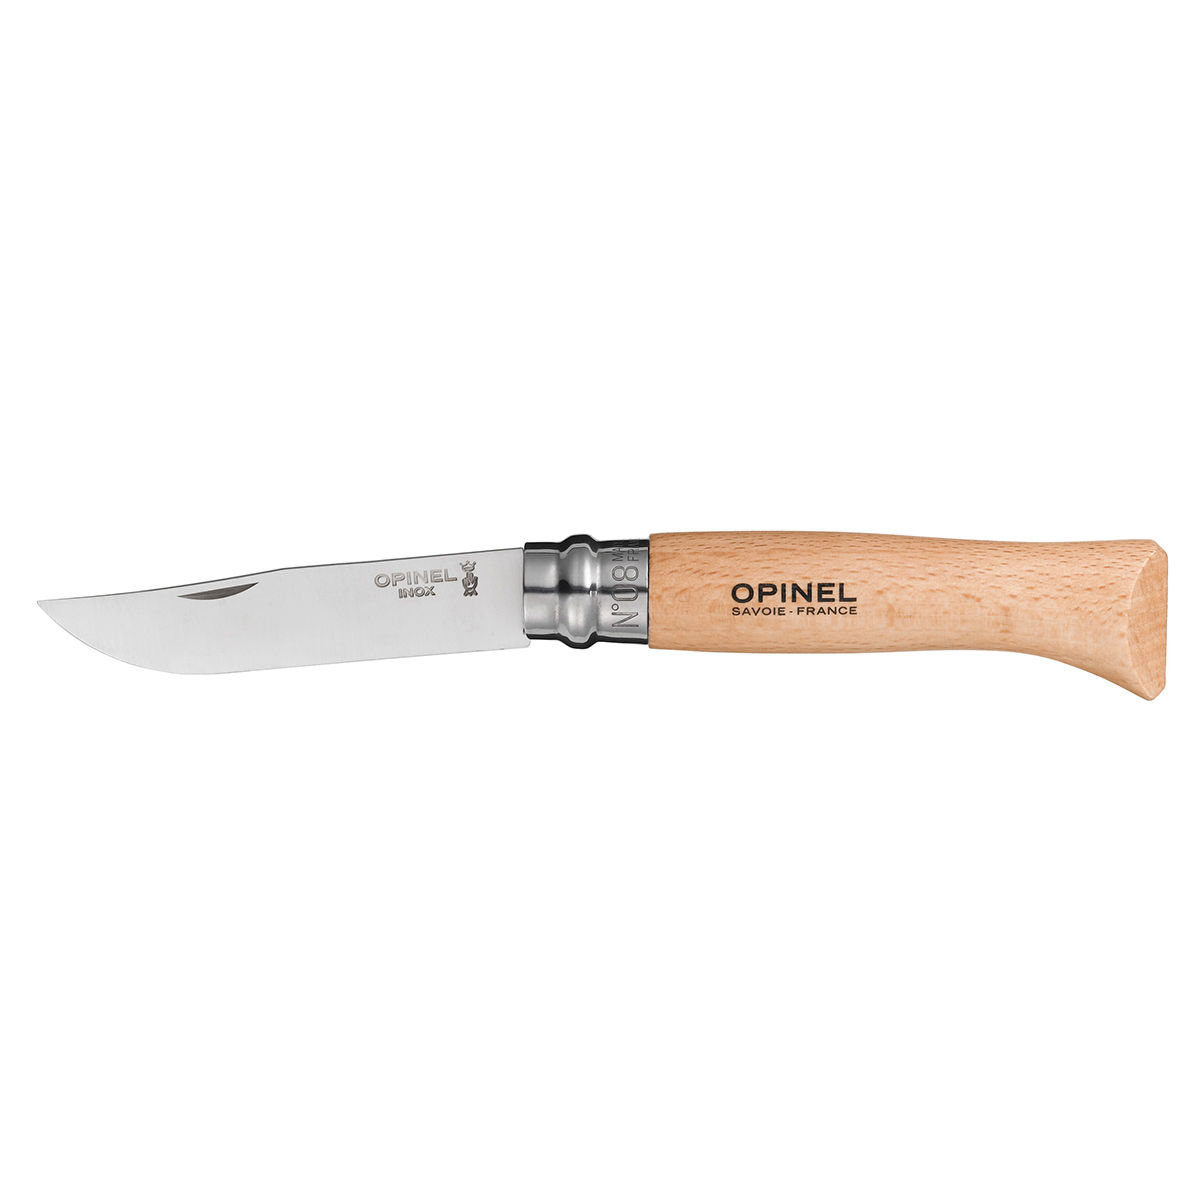 Opinel knife n°8 - Tradition 8.5cm - Stainless steel, beechwood